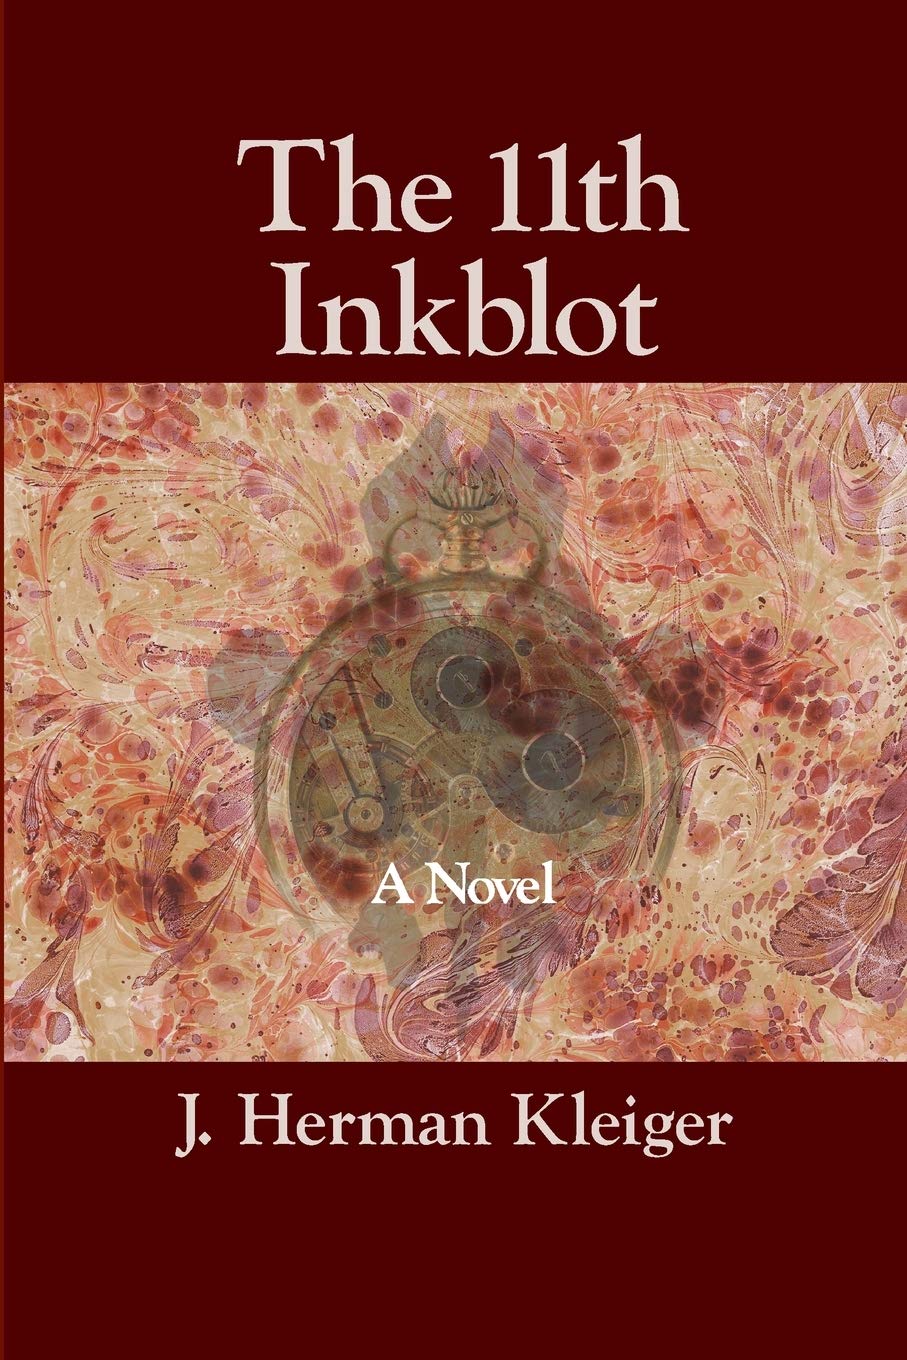 The 11th Inkblot #novel #inkblot #book #jhermankleiger